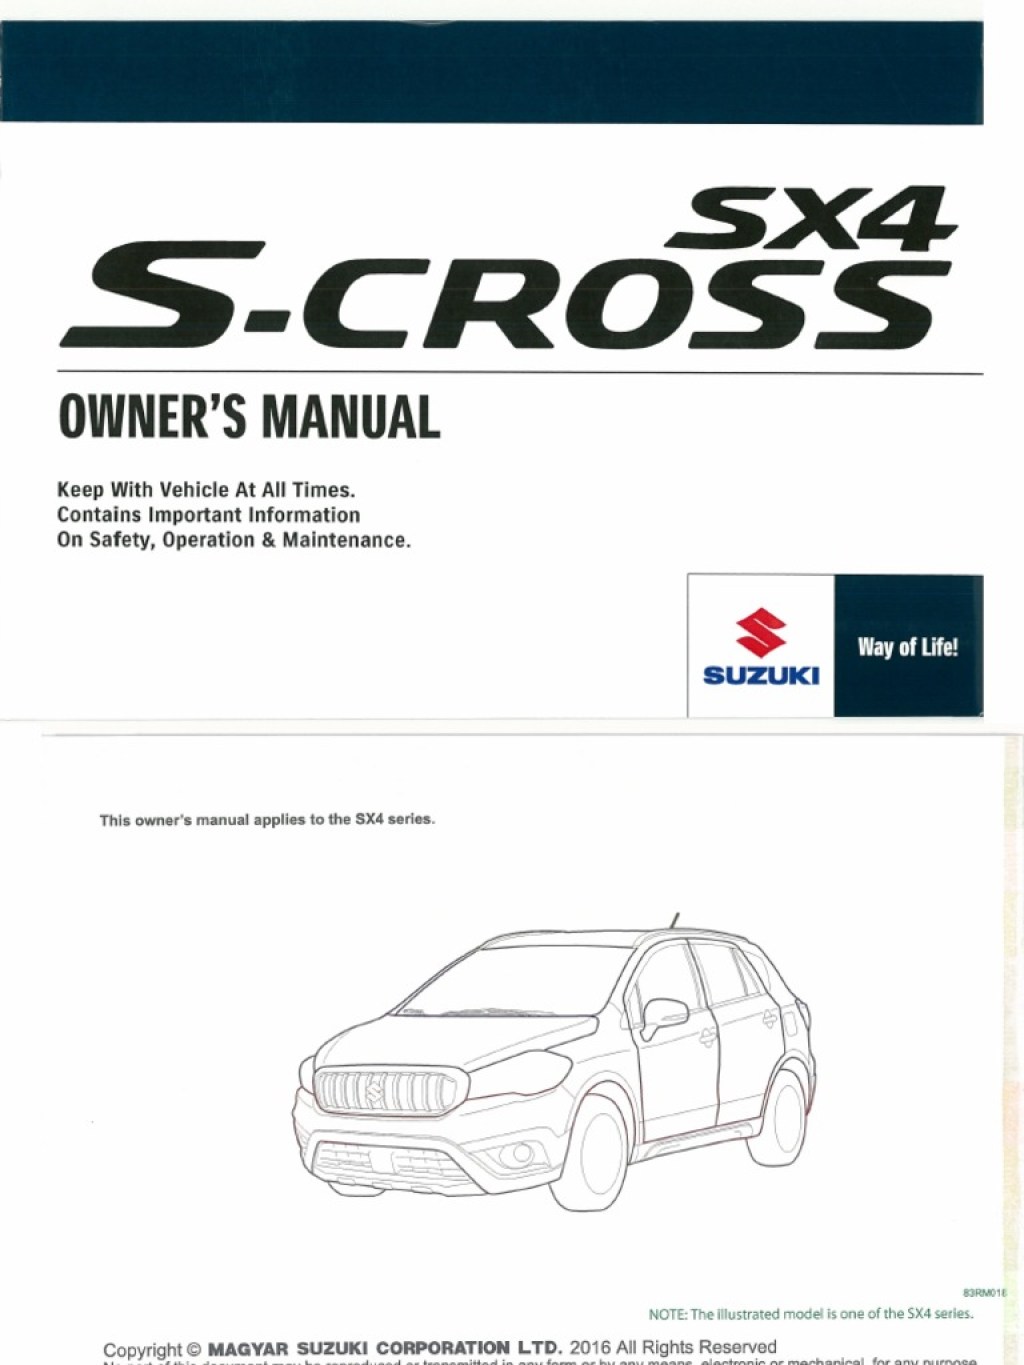 suzuki sx4 s cross user manual pdf - Suzuki S Cross Owners Manual en PDF  PDF